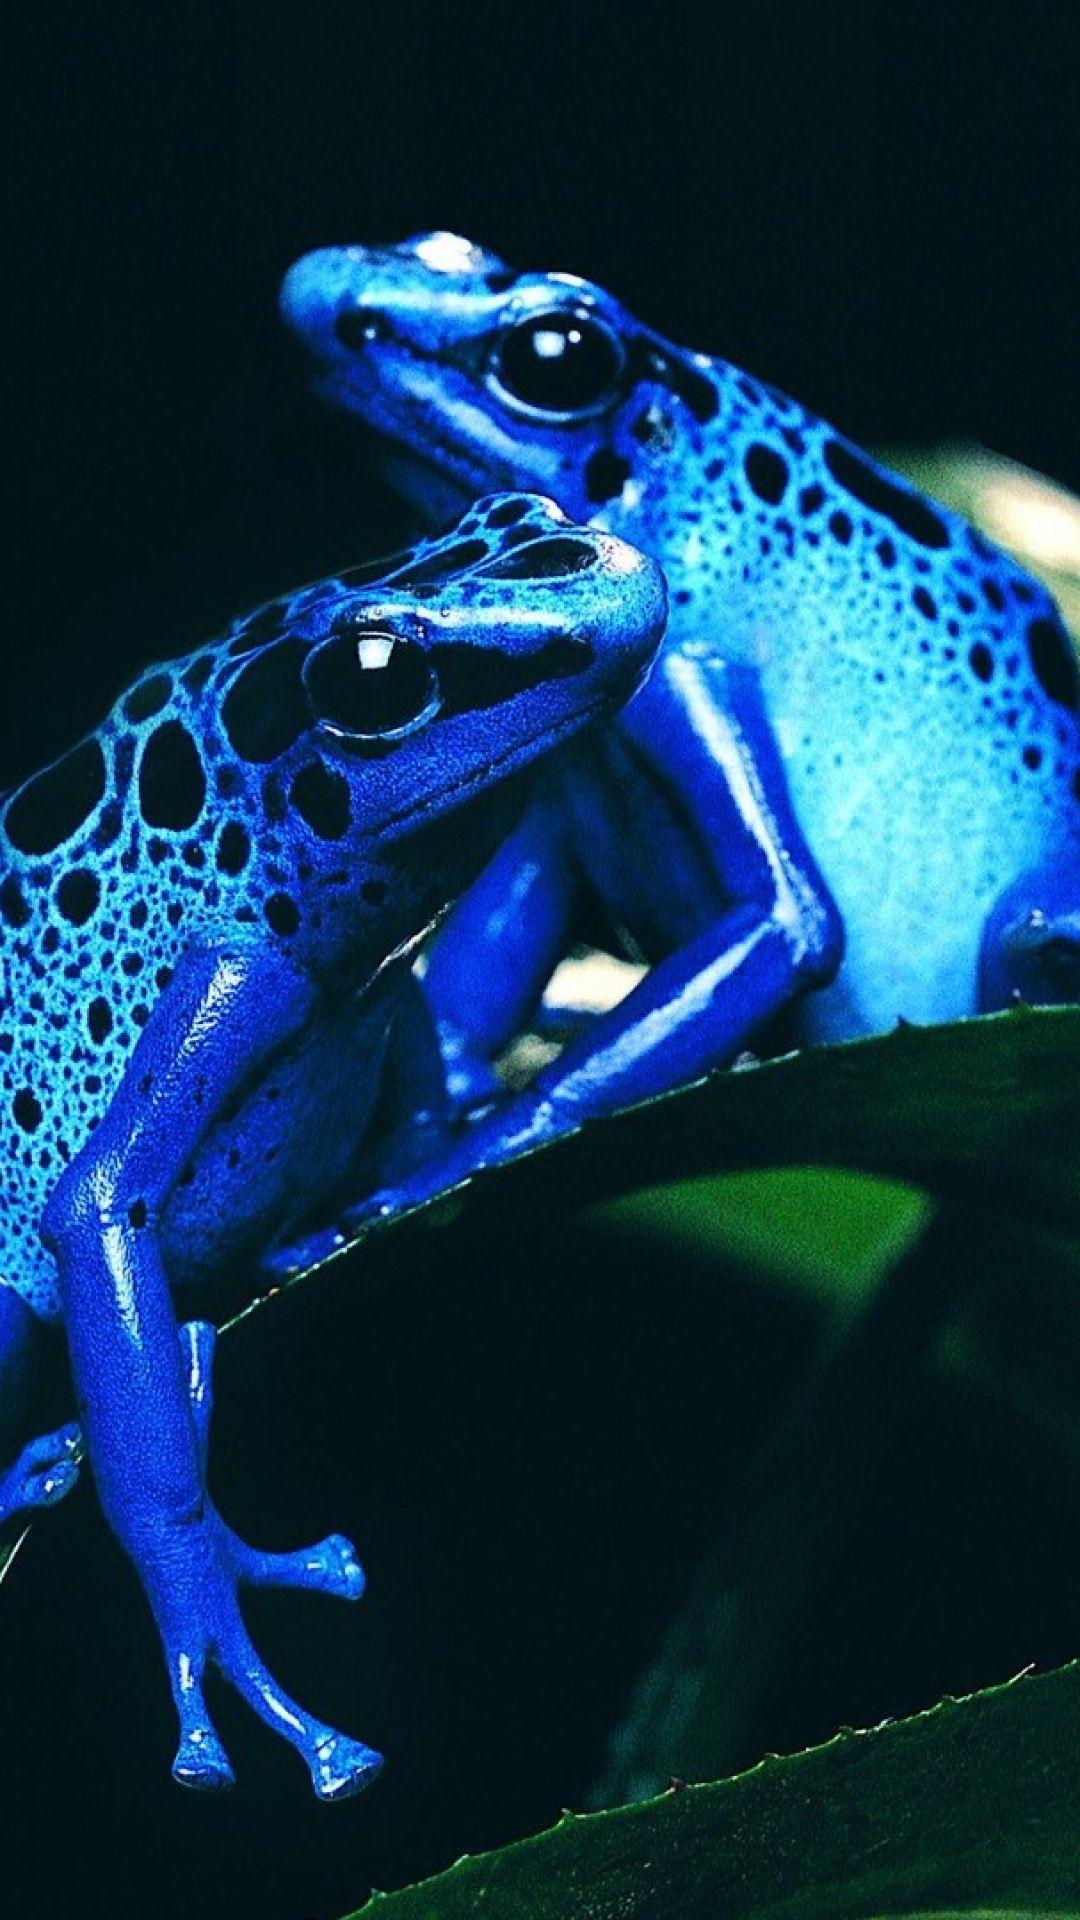 Blue Frogs S4 Wallpaper. Creatures of Reptilian